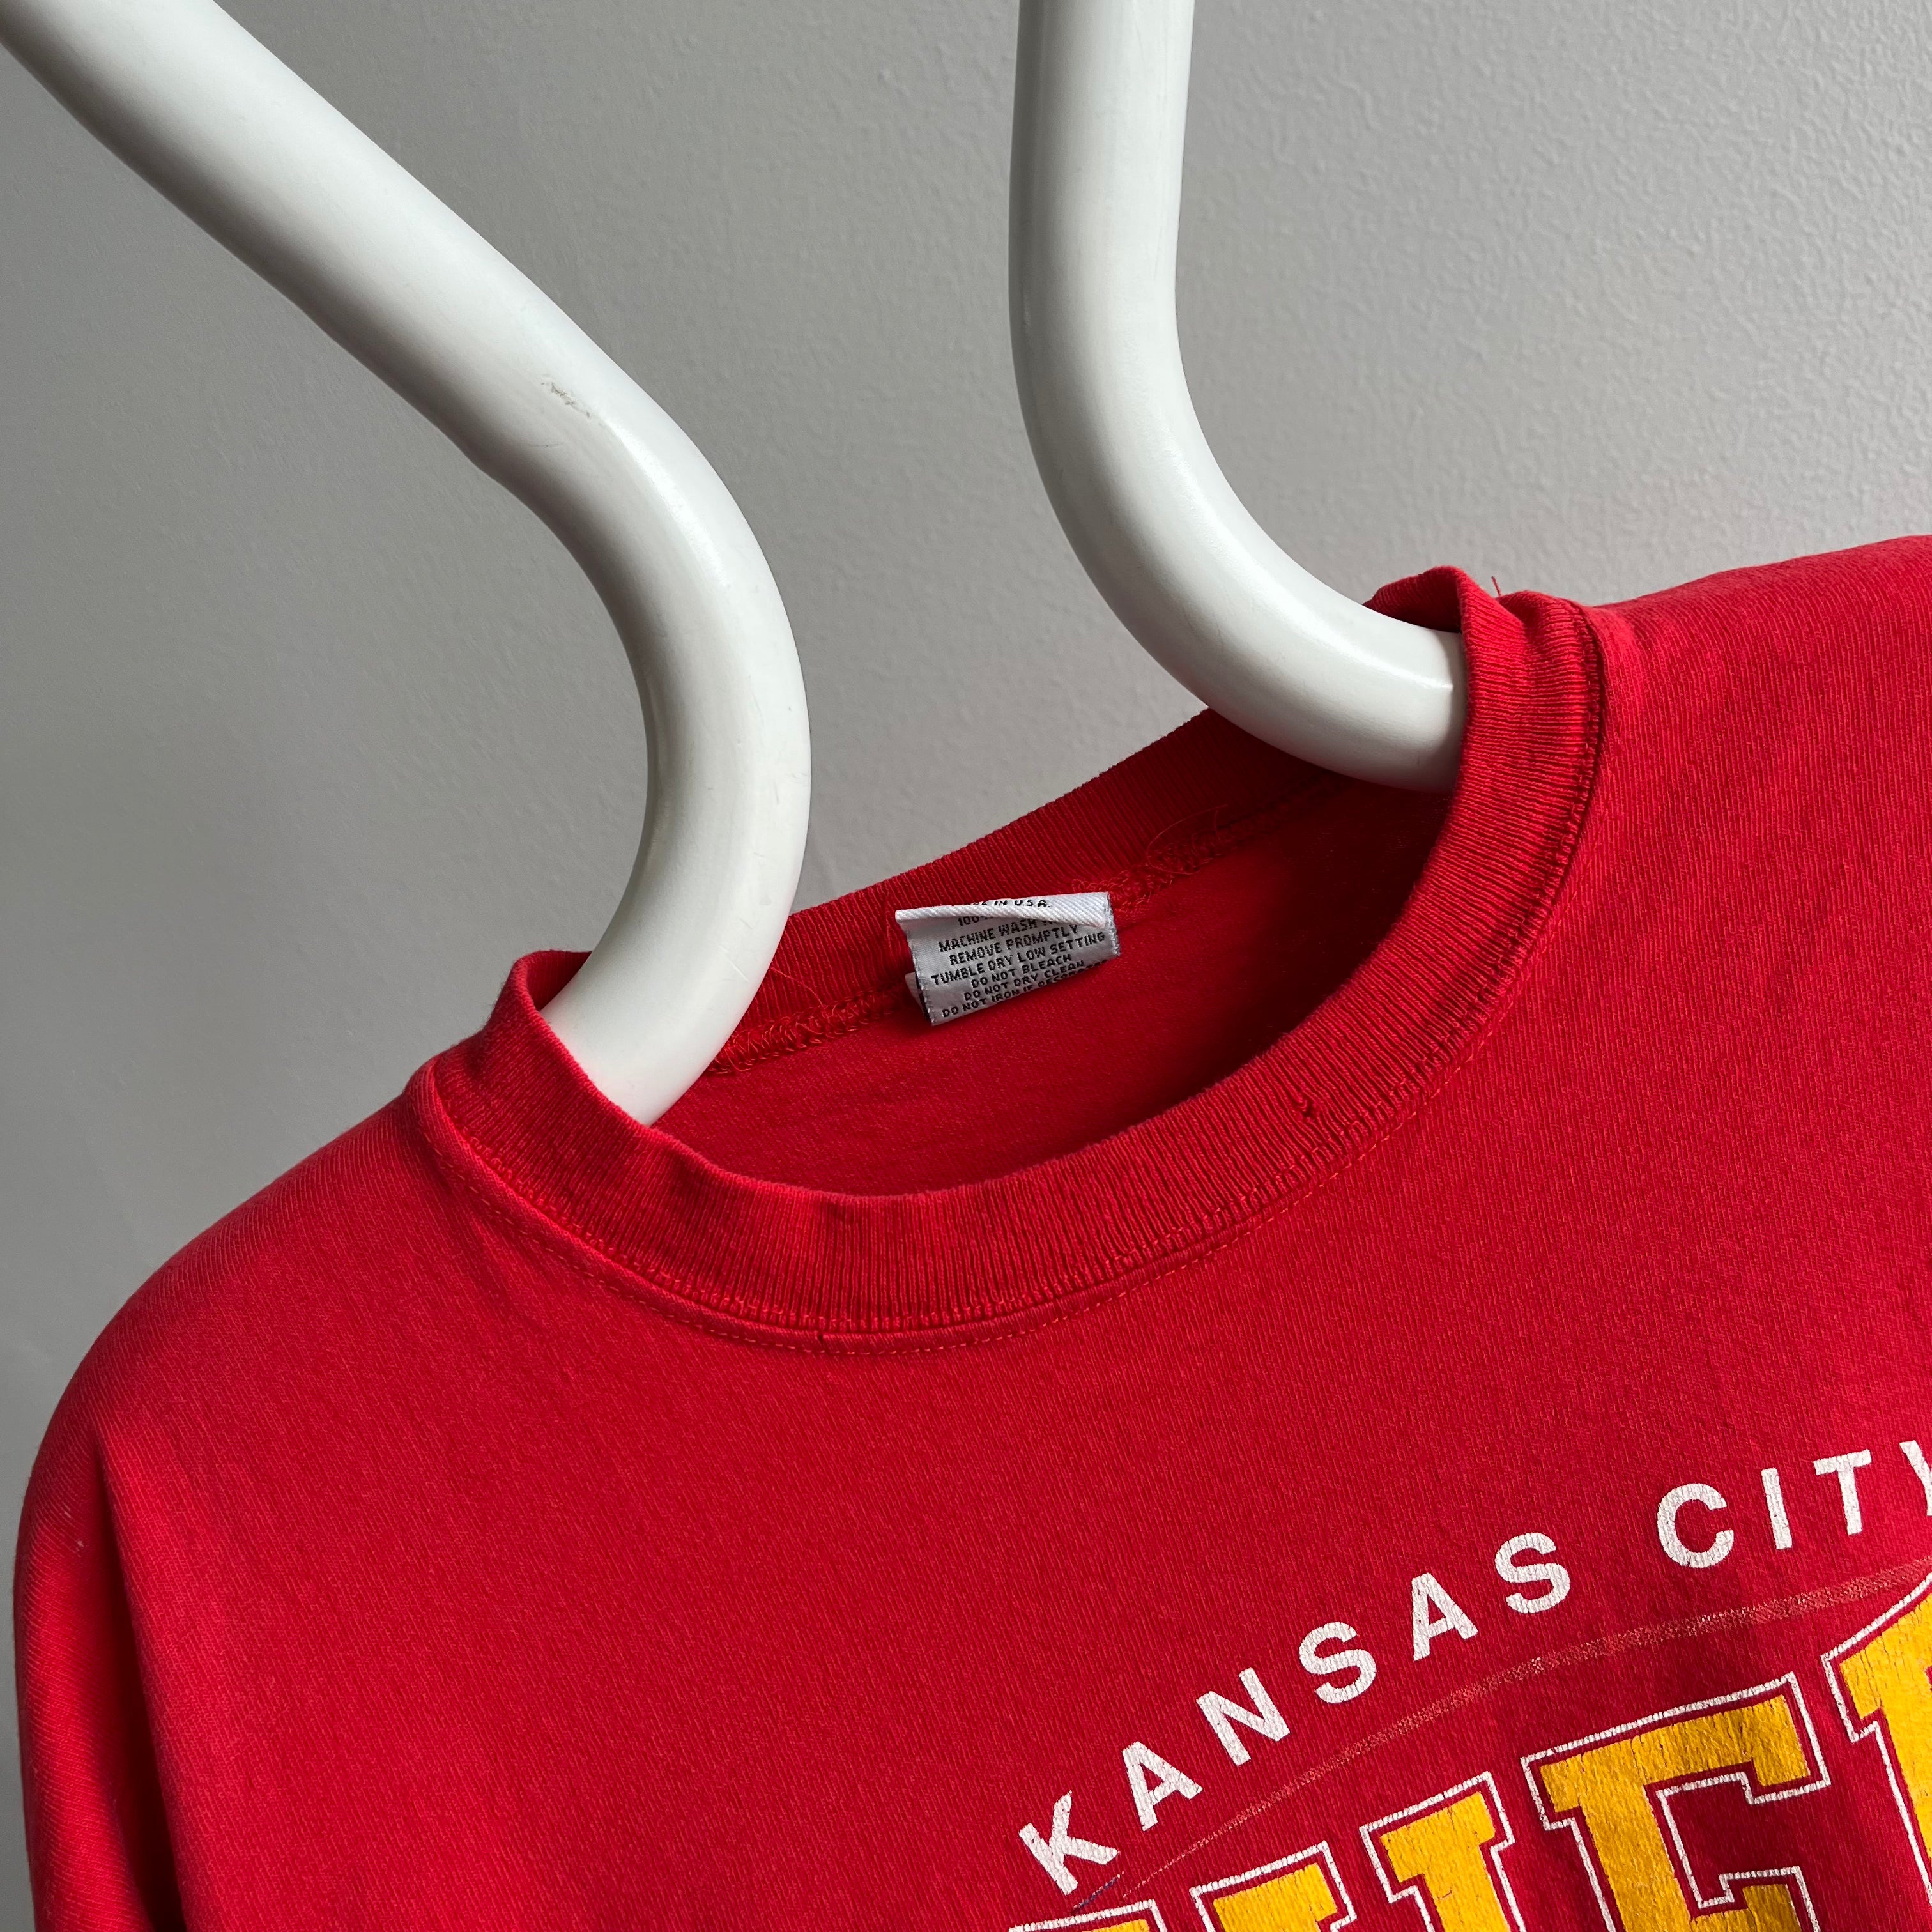 1995 Kansas City Chiefs Pro Line T-Shirt - WINNERS